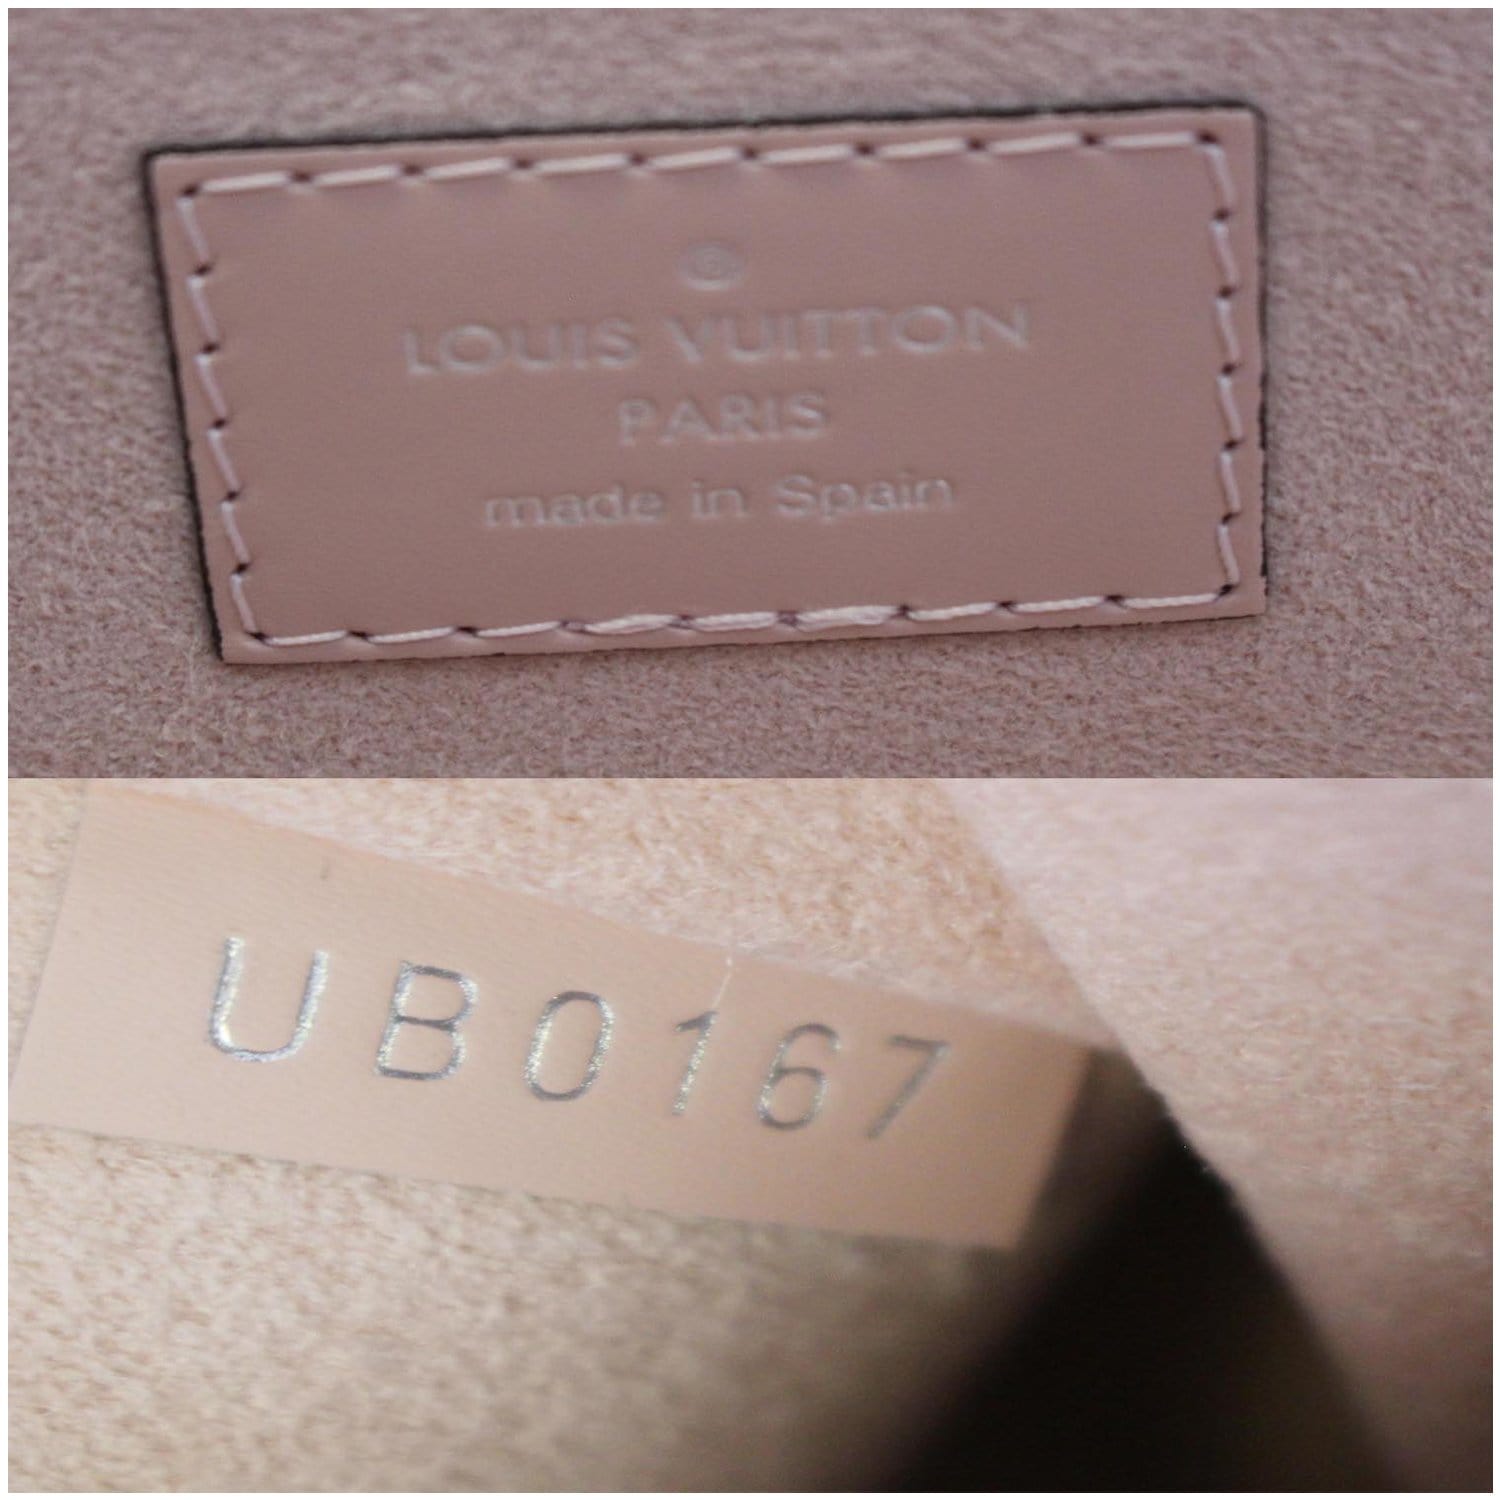 LVicons - Louis Vuitton Neverfull Epi  Louis vuitton, Louis vuitton  neverfull, Vuitton